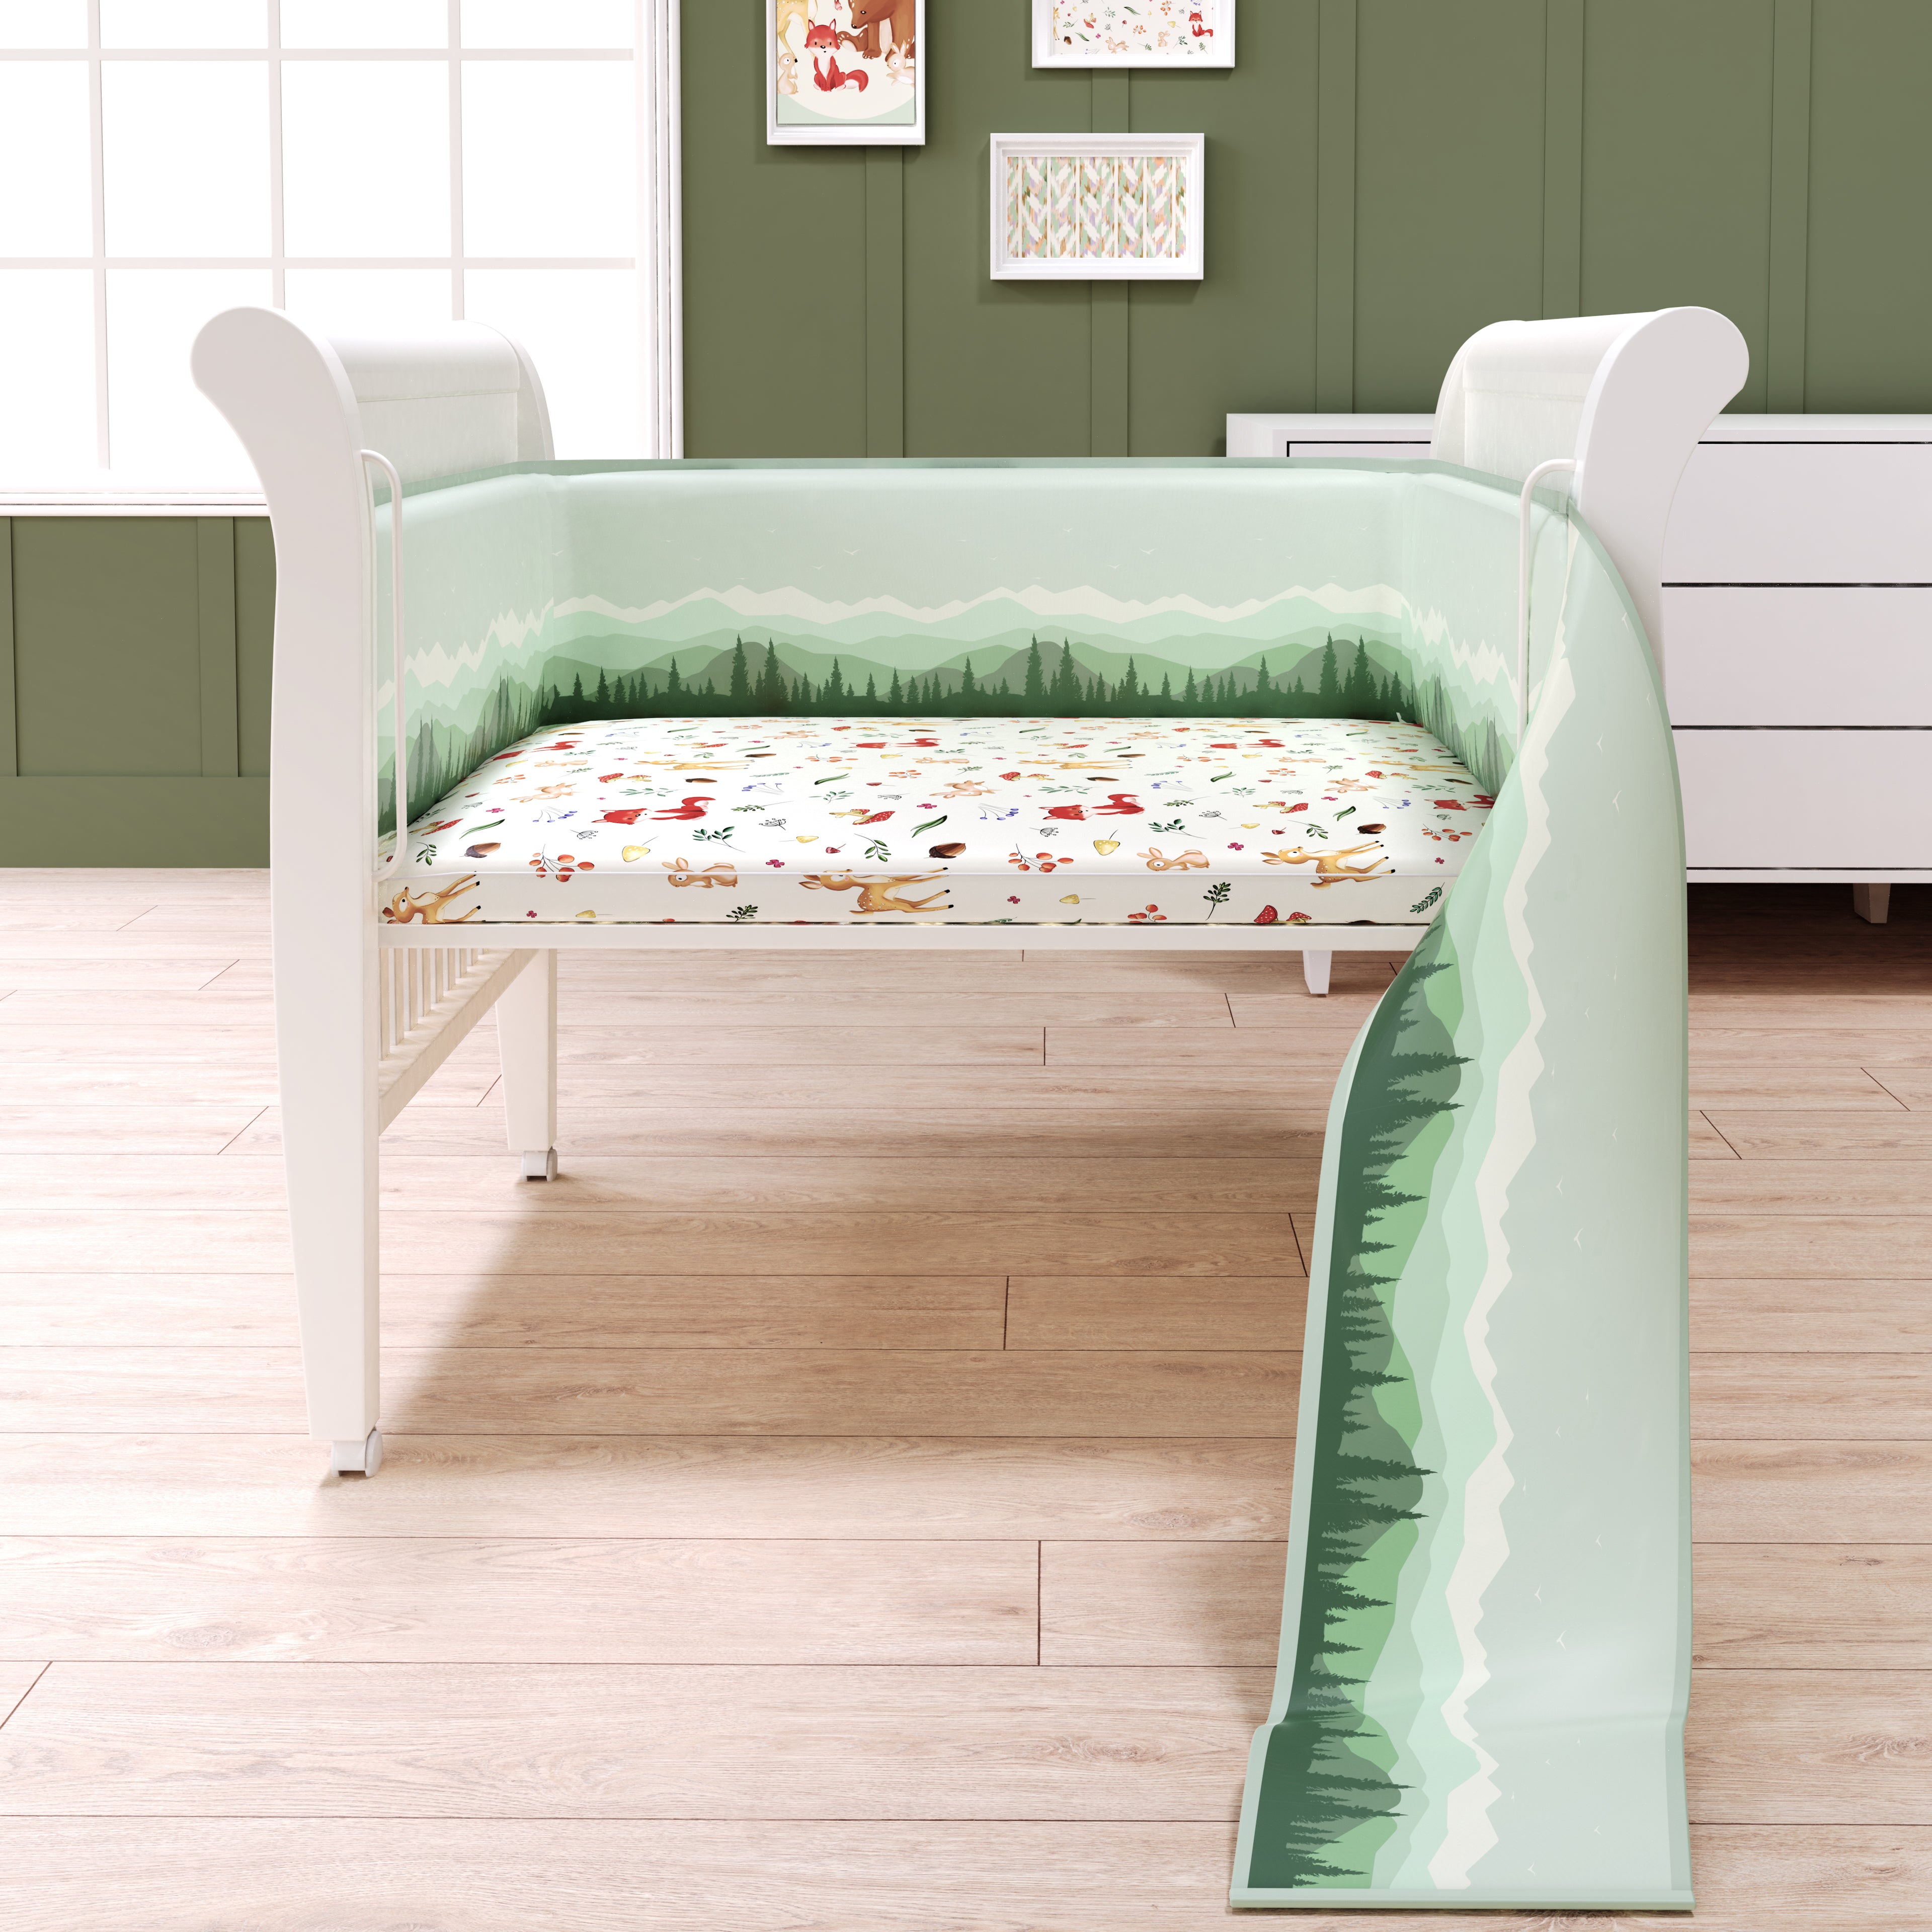 Fancy Fluff 7 Pc Organic Baby Cot Bedding Set -  Woodland